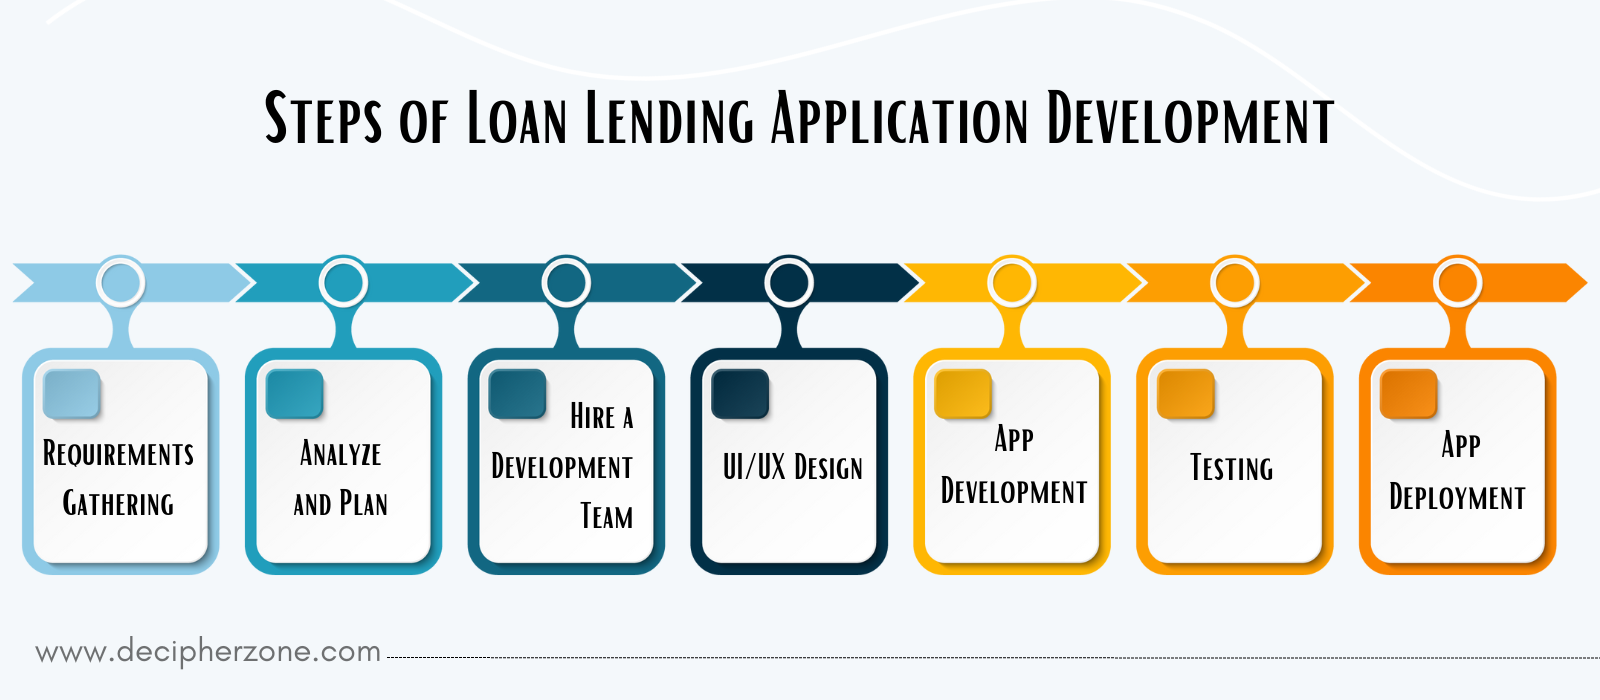 Loan Lending Application Development Steps